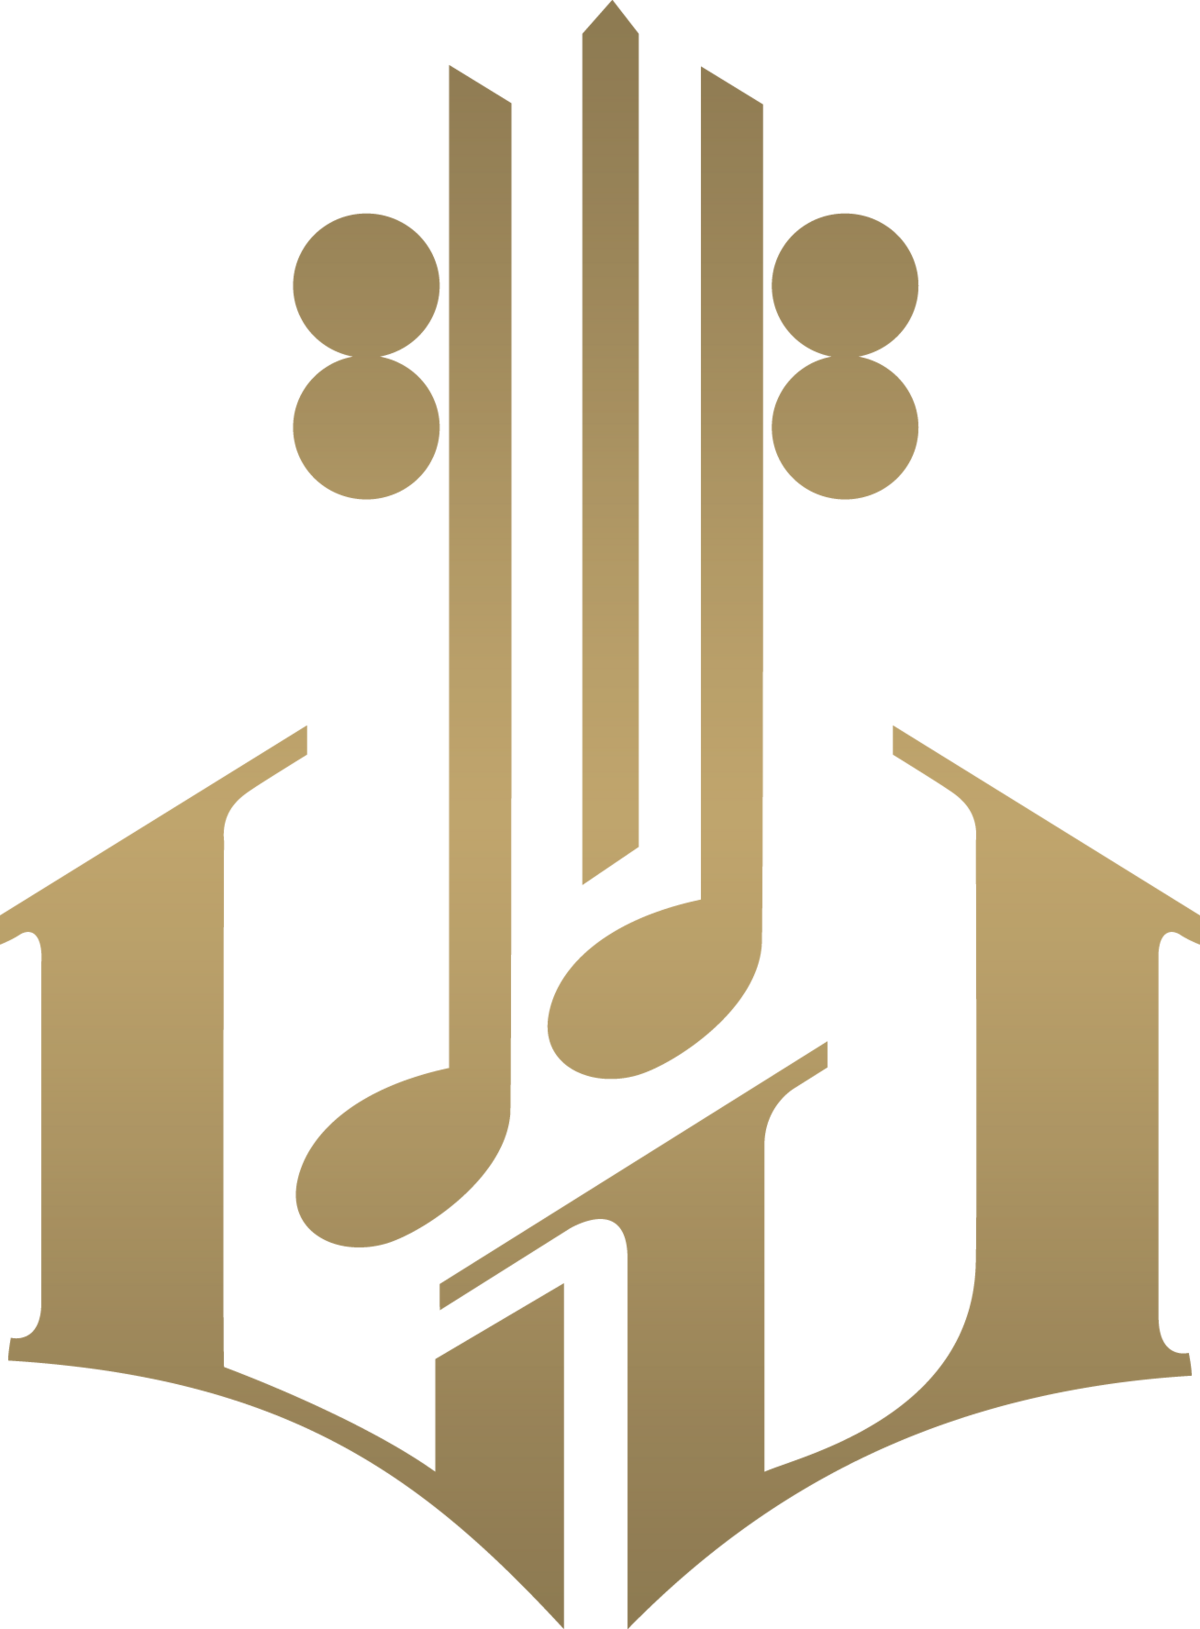 File:VL logo.svg - Wikipedia